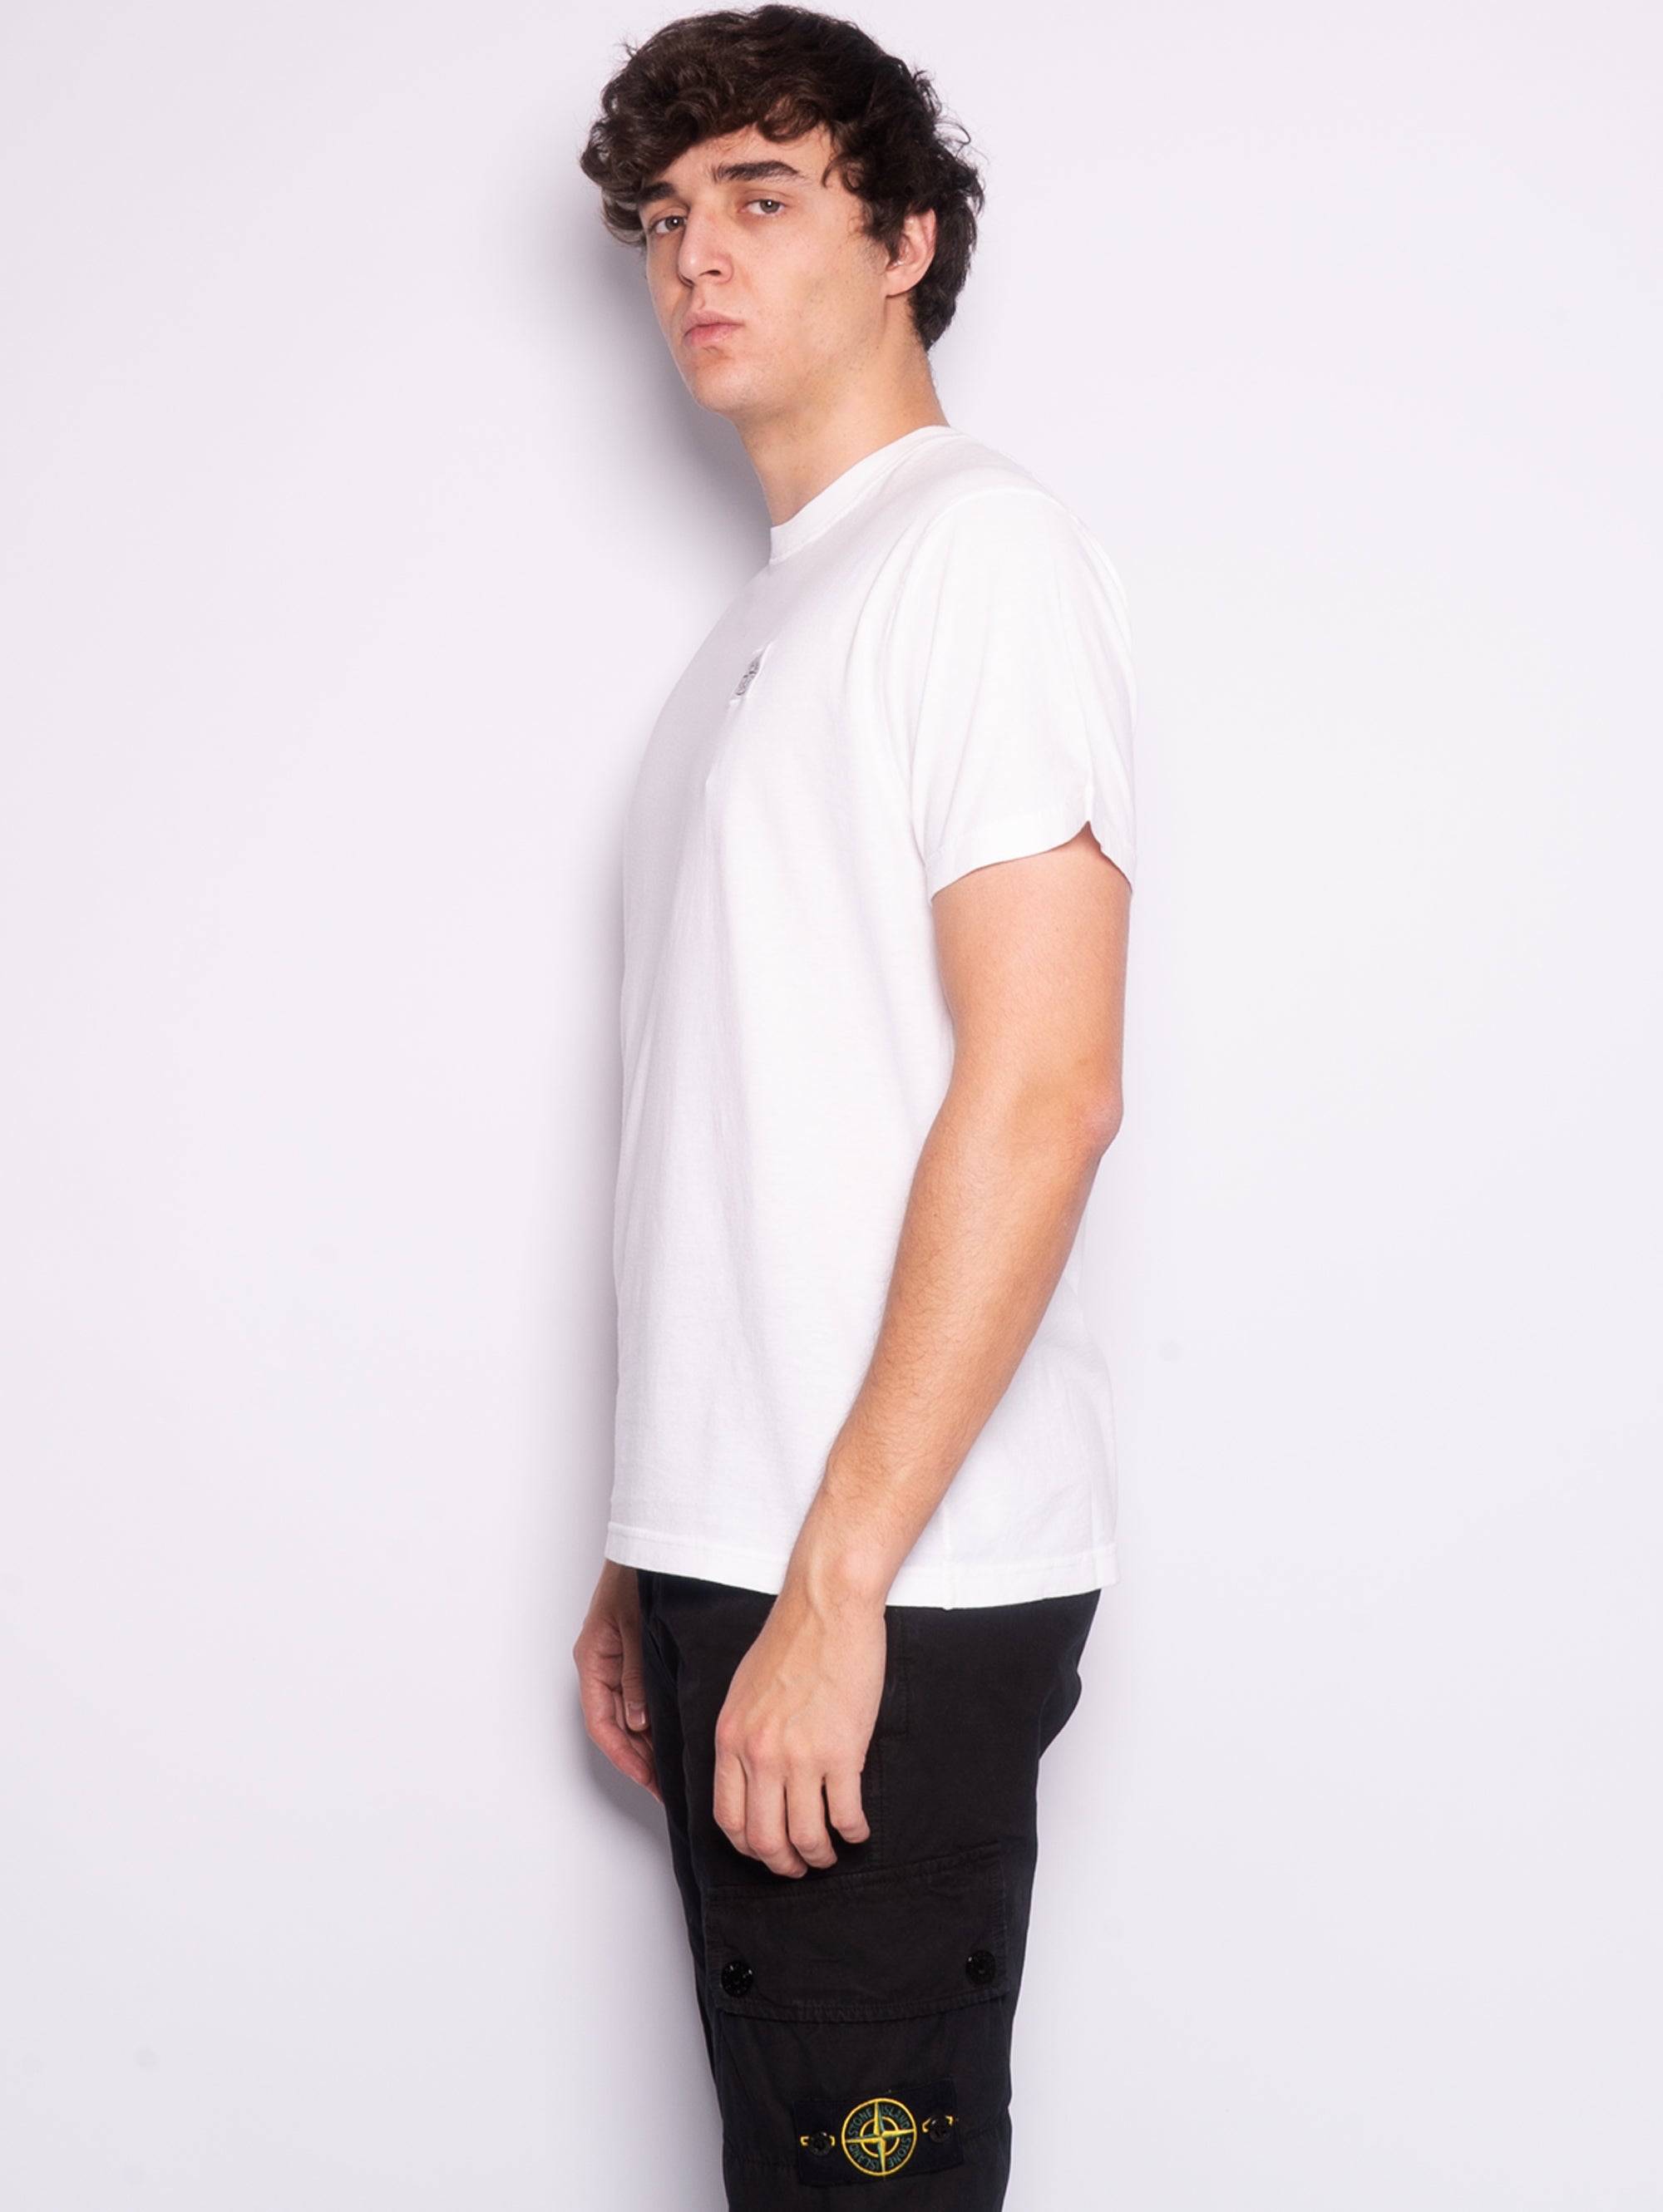 Stückgefärbtes T-Shirt mit festem Weißeffekt